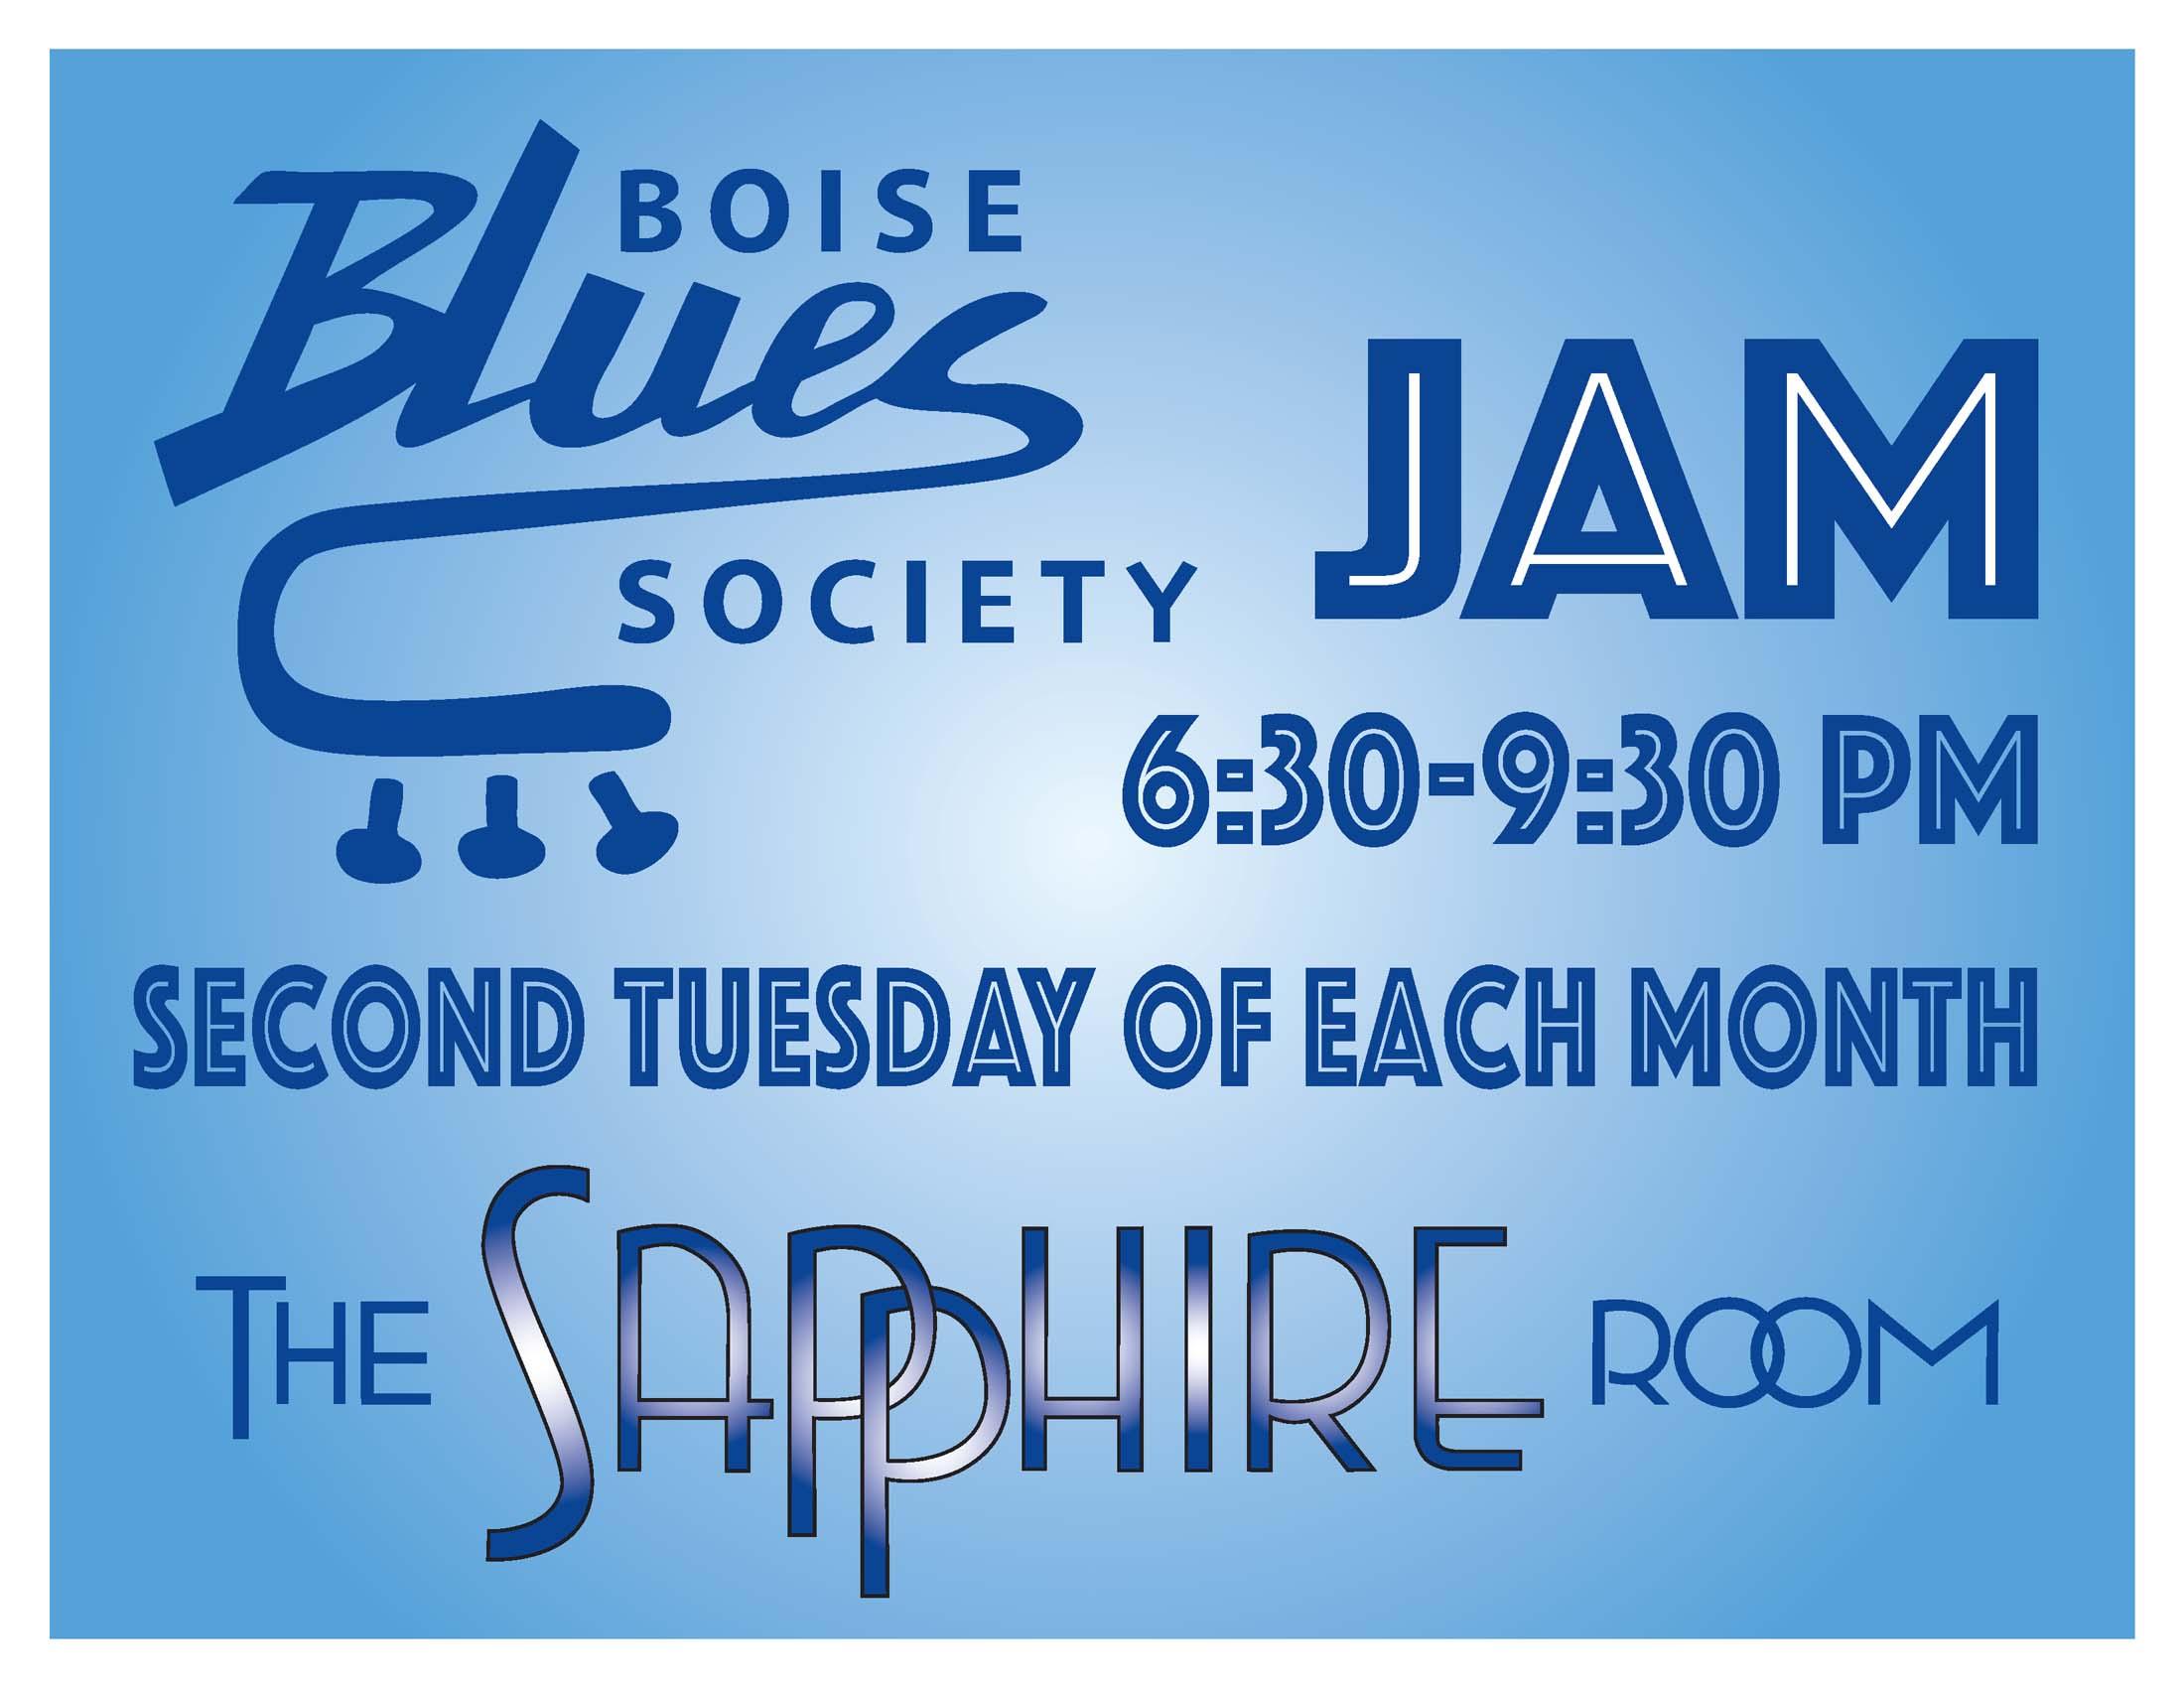 Boise Blues Society JAM